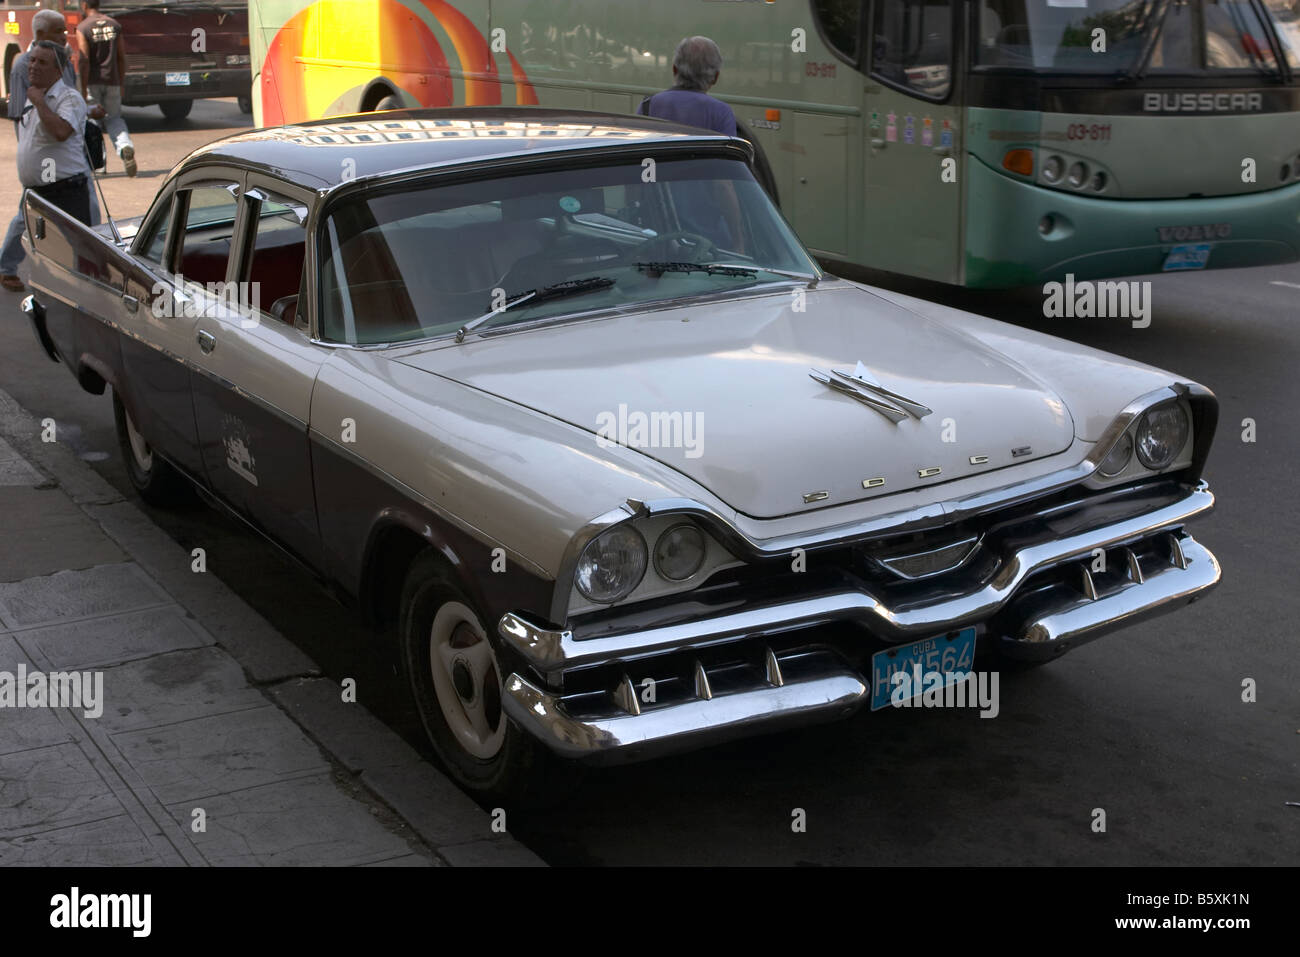 Dodge, an old american car, cream or white in colour, Havana, Cuba. Stock Photo